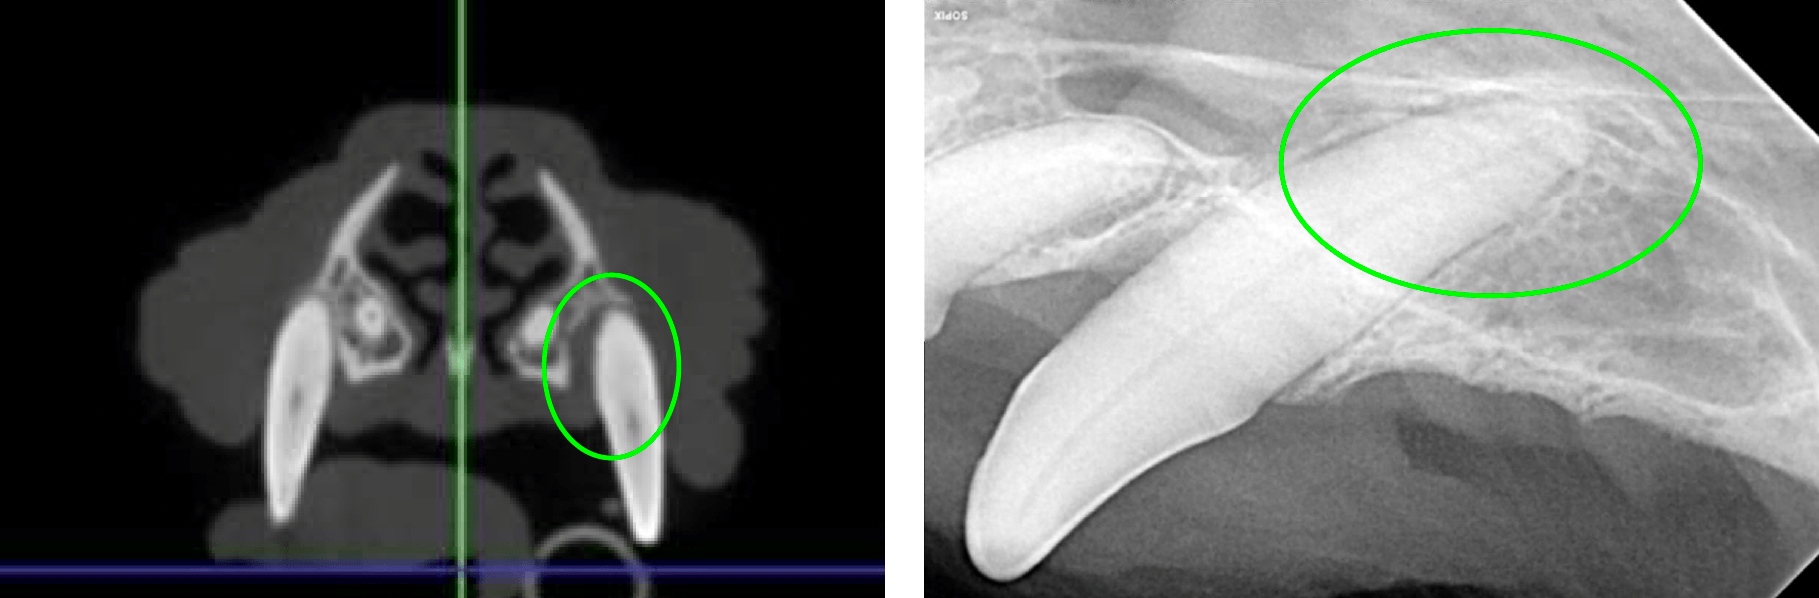 Bone Loss affecting uppler left canine tooth